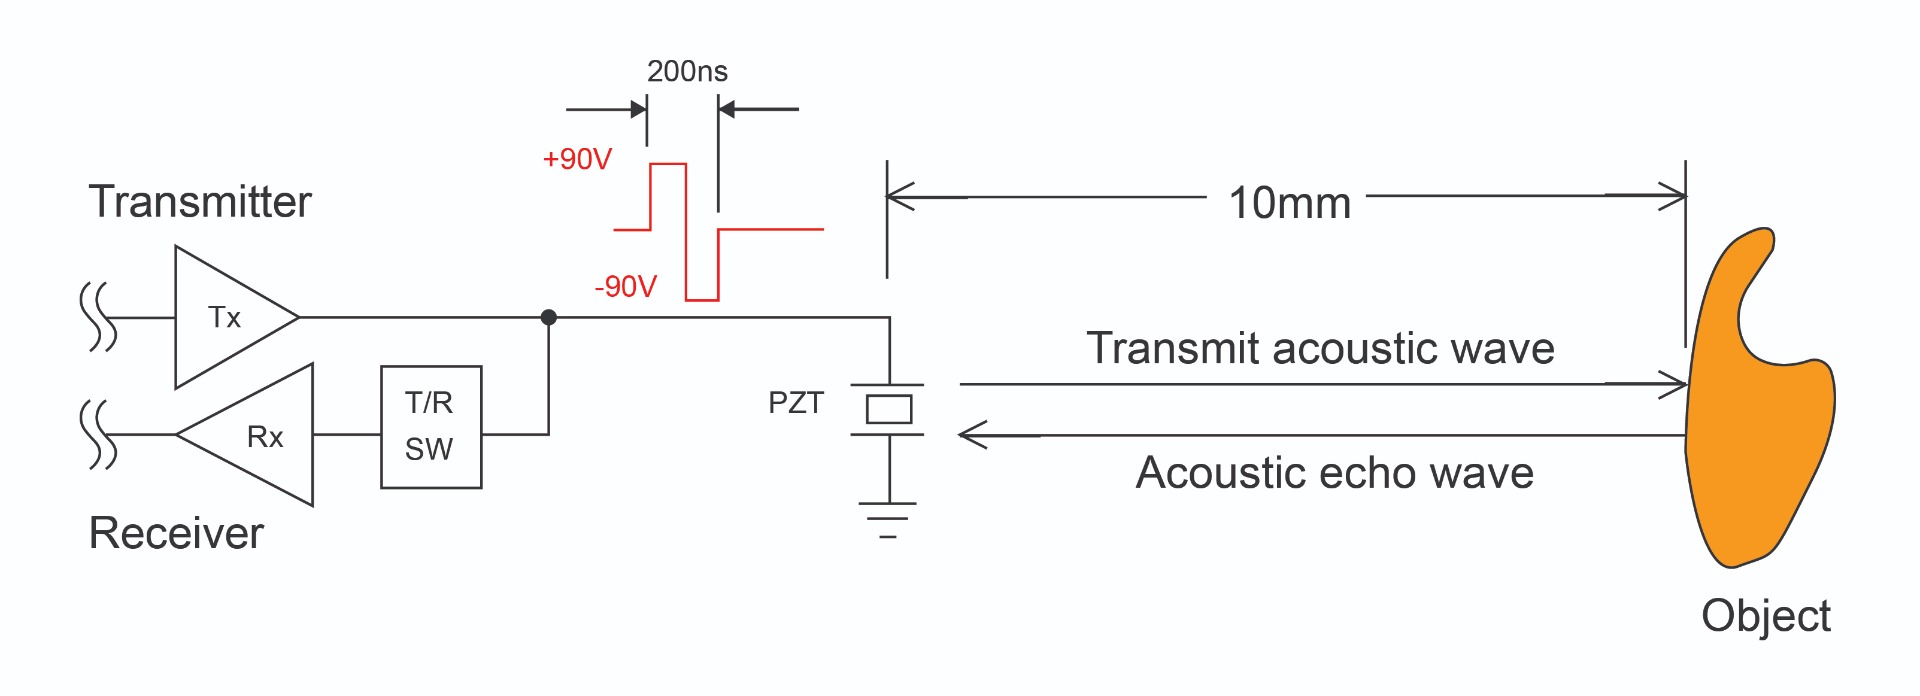 Figure 1: Single-Channel PZT Example